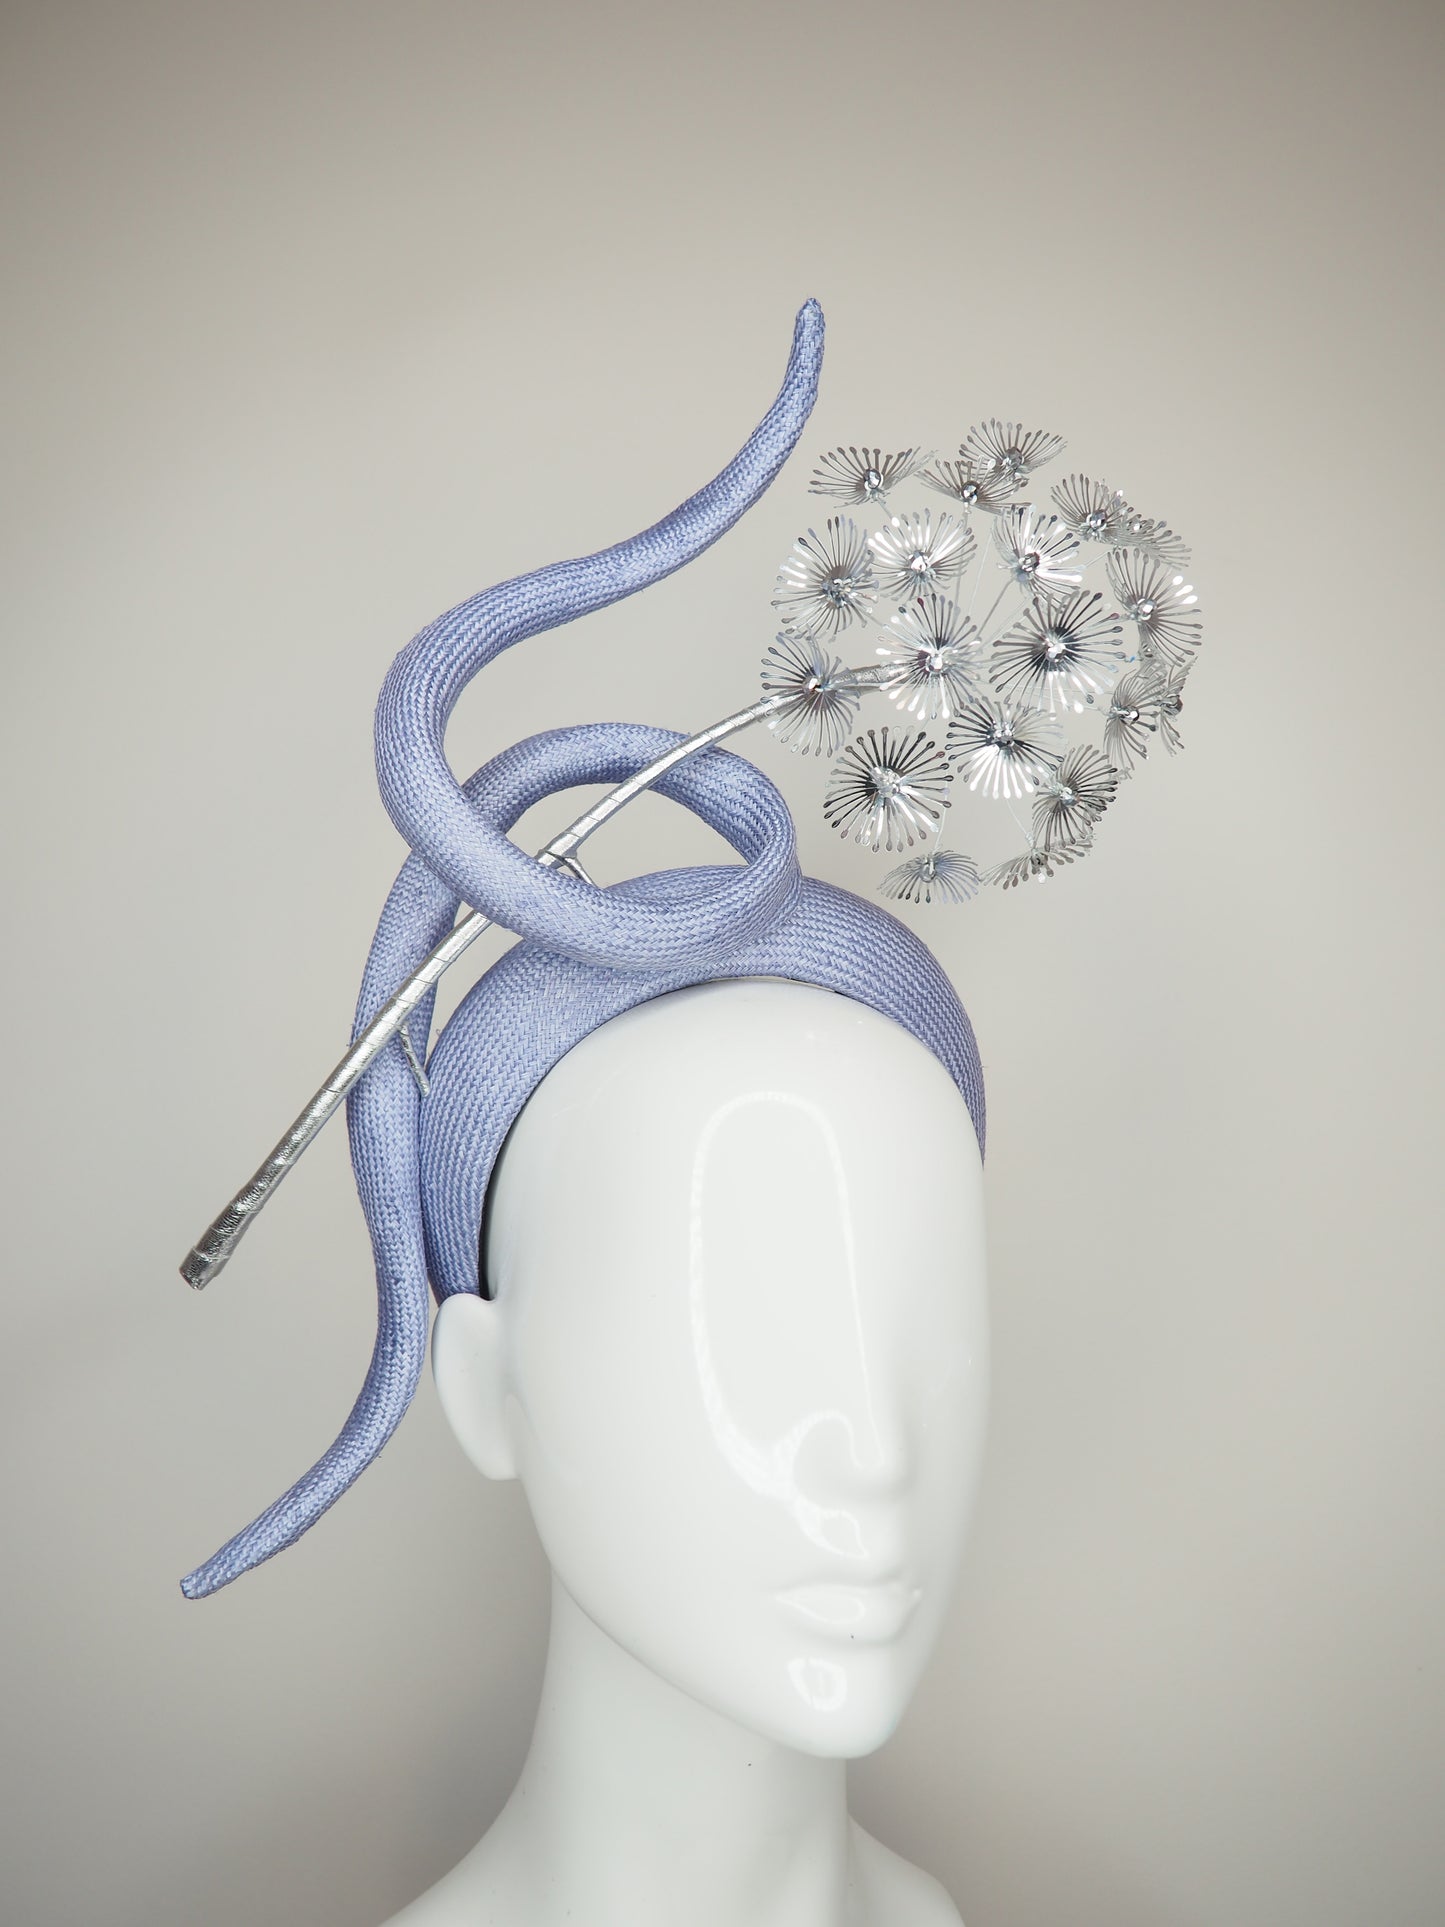 Dandelion delight - periwinkle parisisal straw headband with silver beaded sequin dandelion